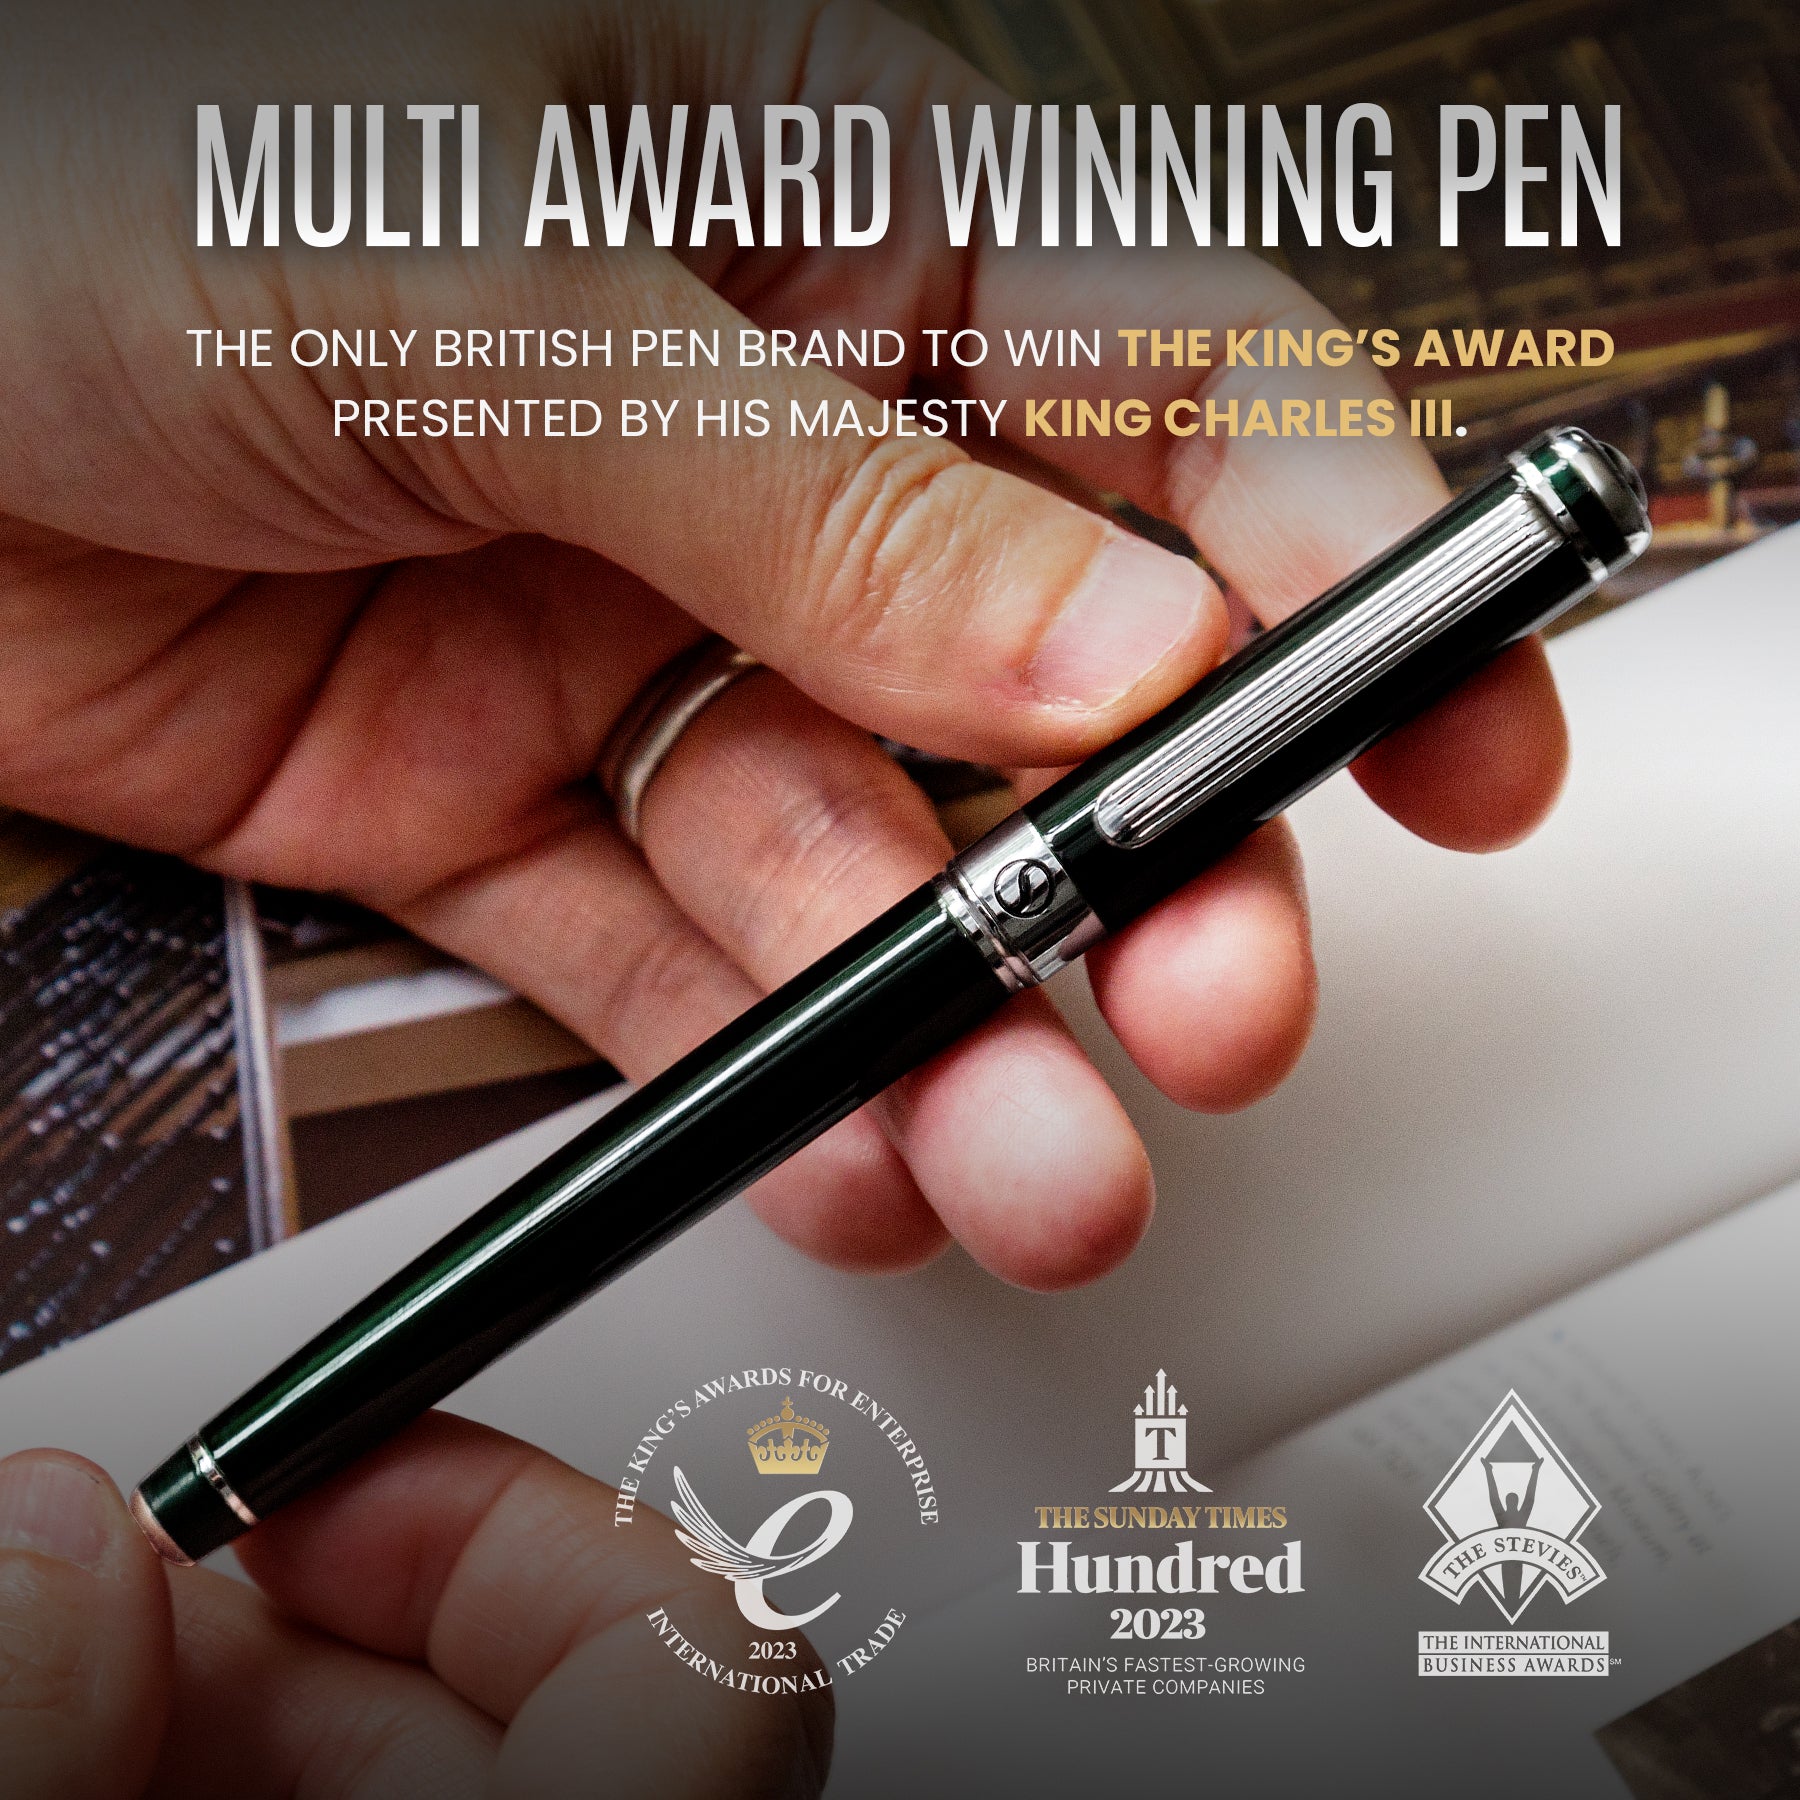 Scriveiner Black Green Rollerball Pen - Stunning Luxury Pen, Chrome Finish